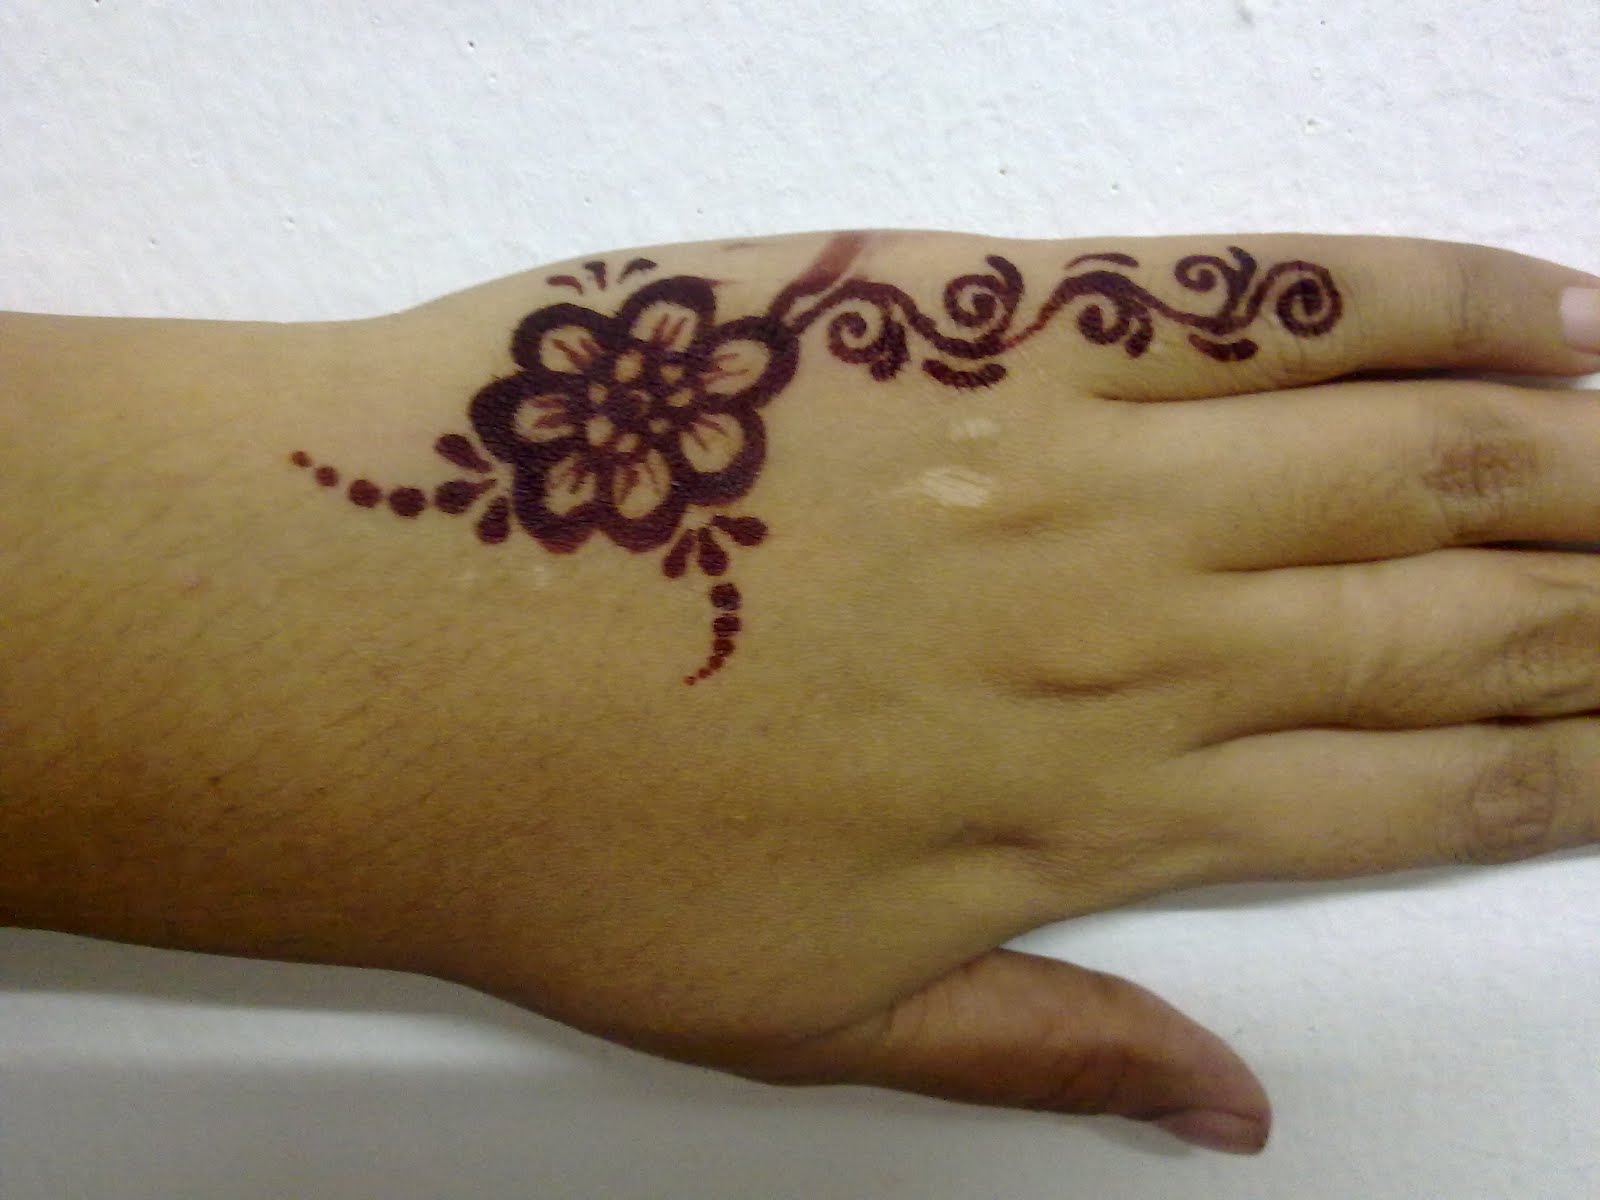 inai pengantin (ukiran henna) dan make up ukiran inai simple jpg (1600x1200)